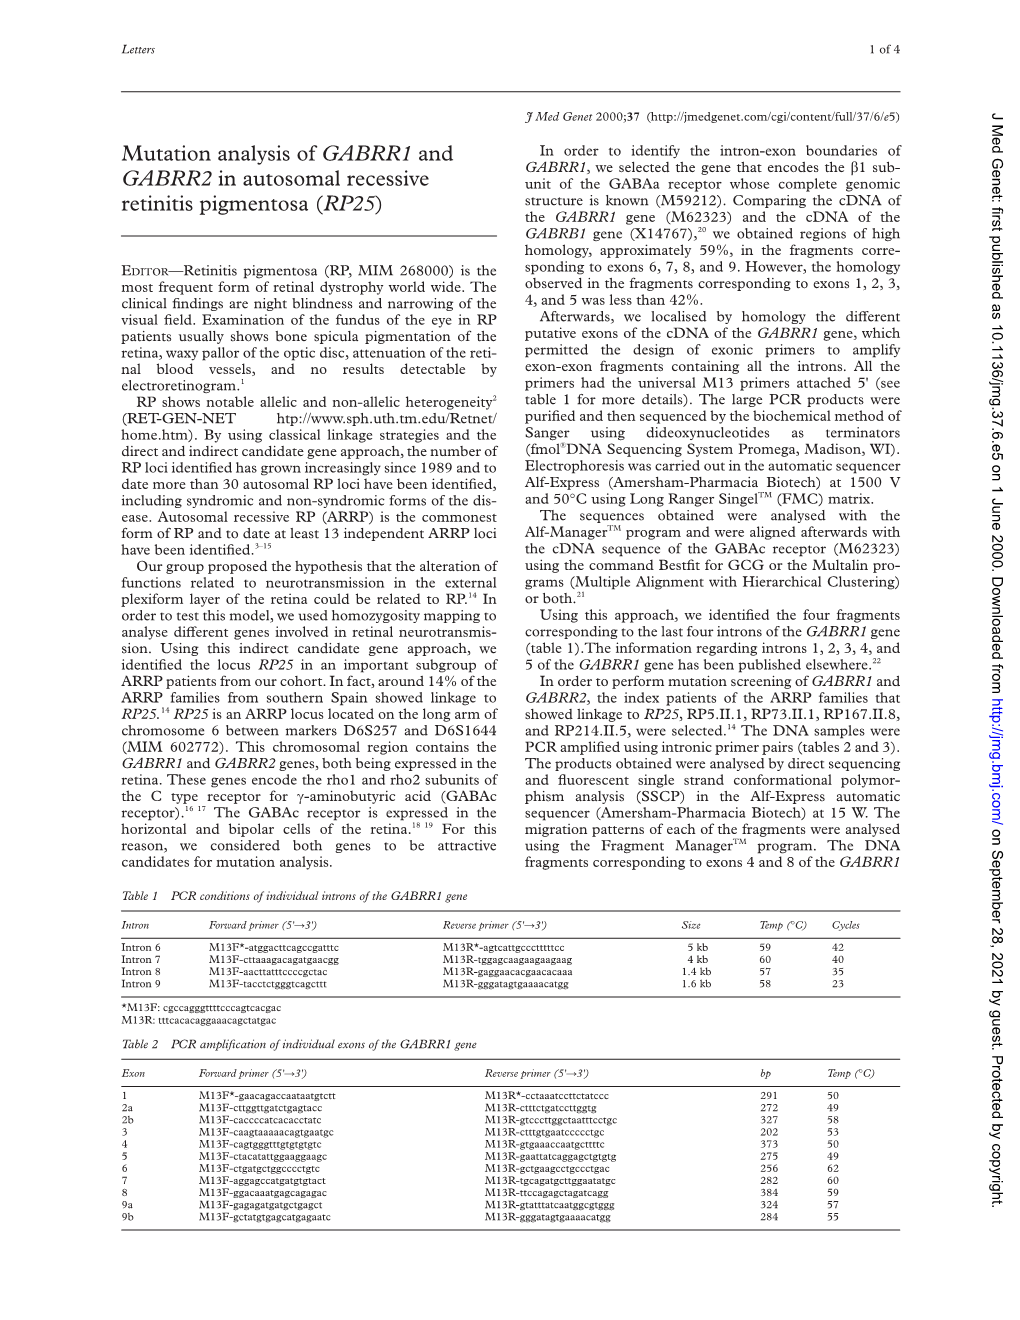 Mutation Analysis of GABRR1 and GABRR2 in Autosomal Recessive Retinitis Pigmentosa